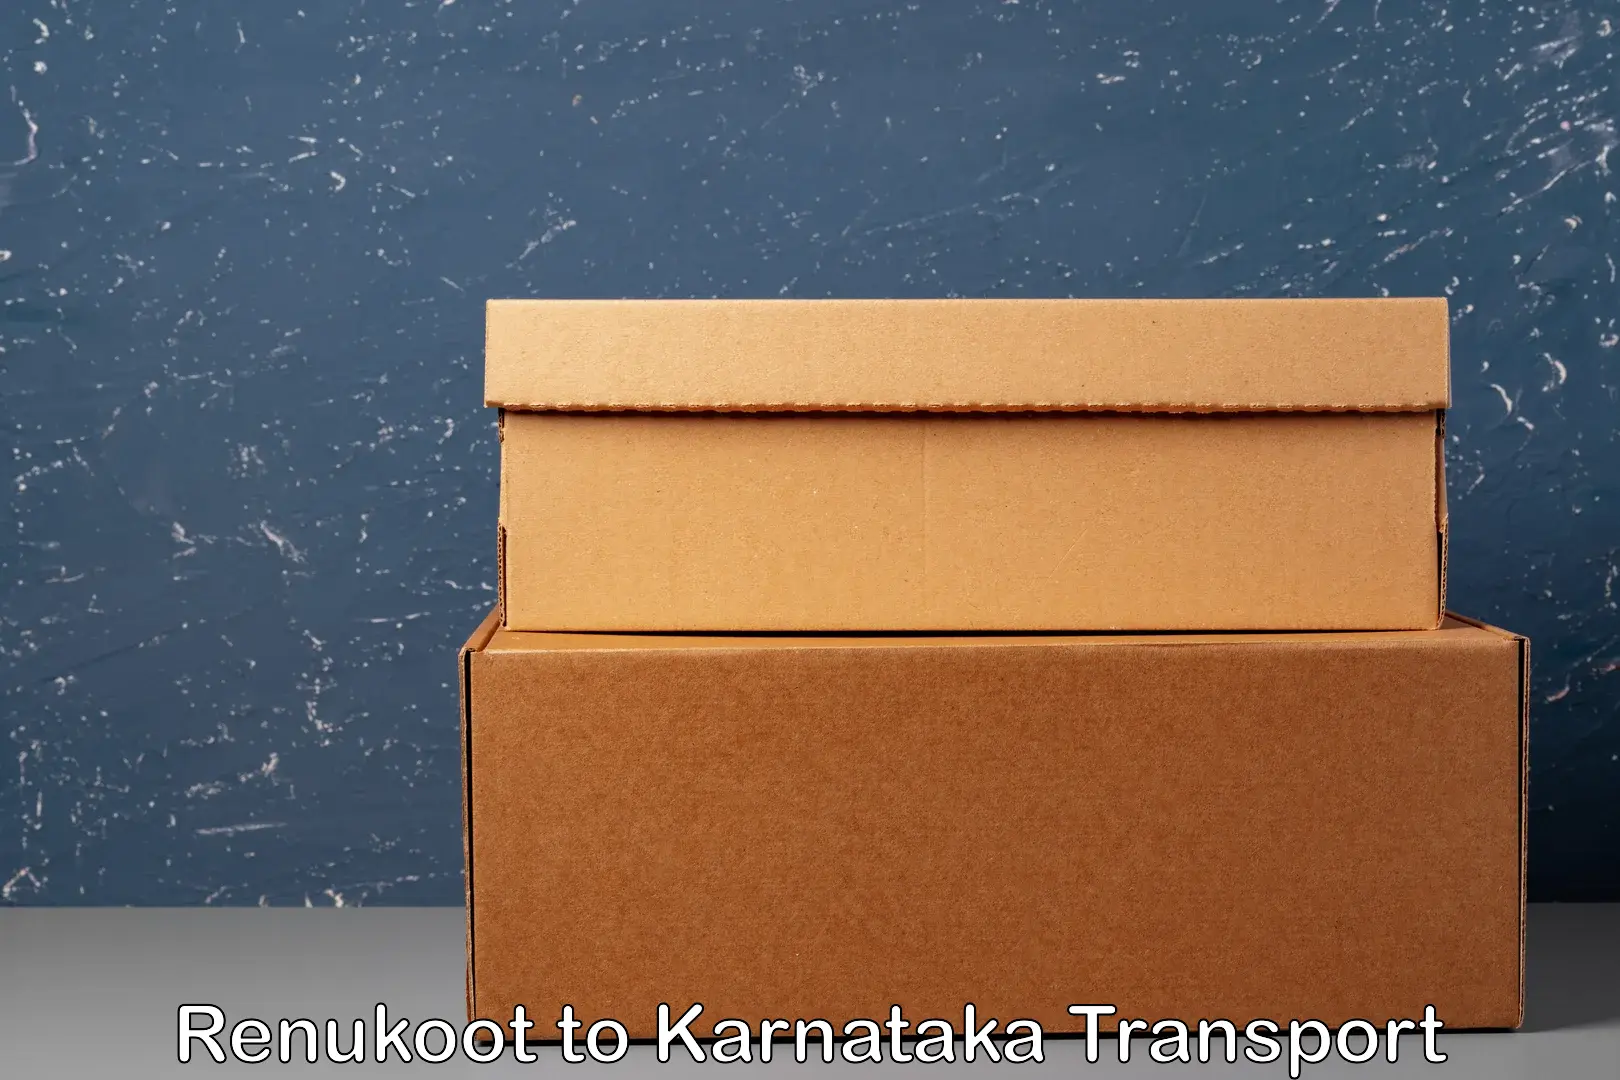 Nearby transport service Renukoot to Karnataka